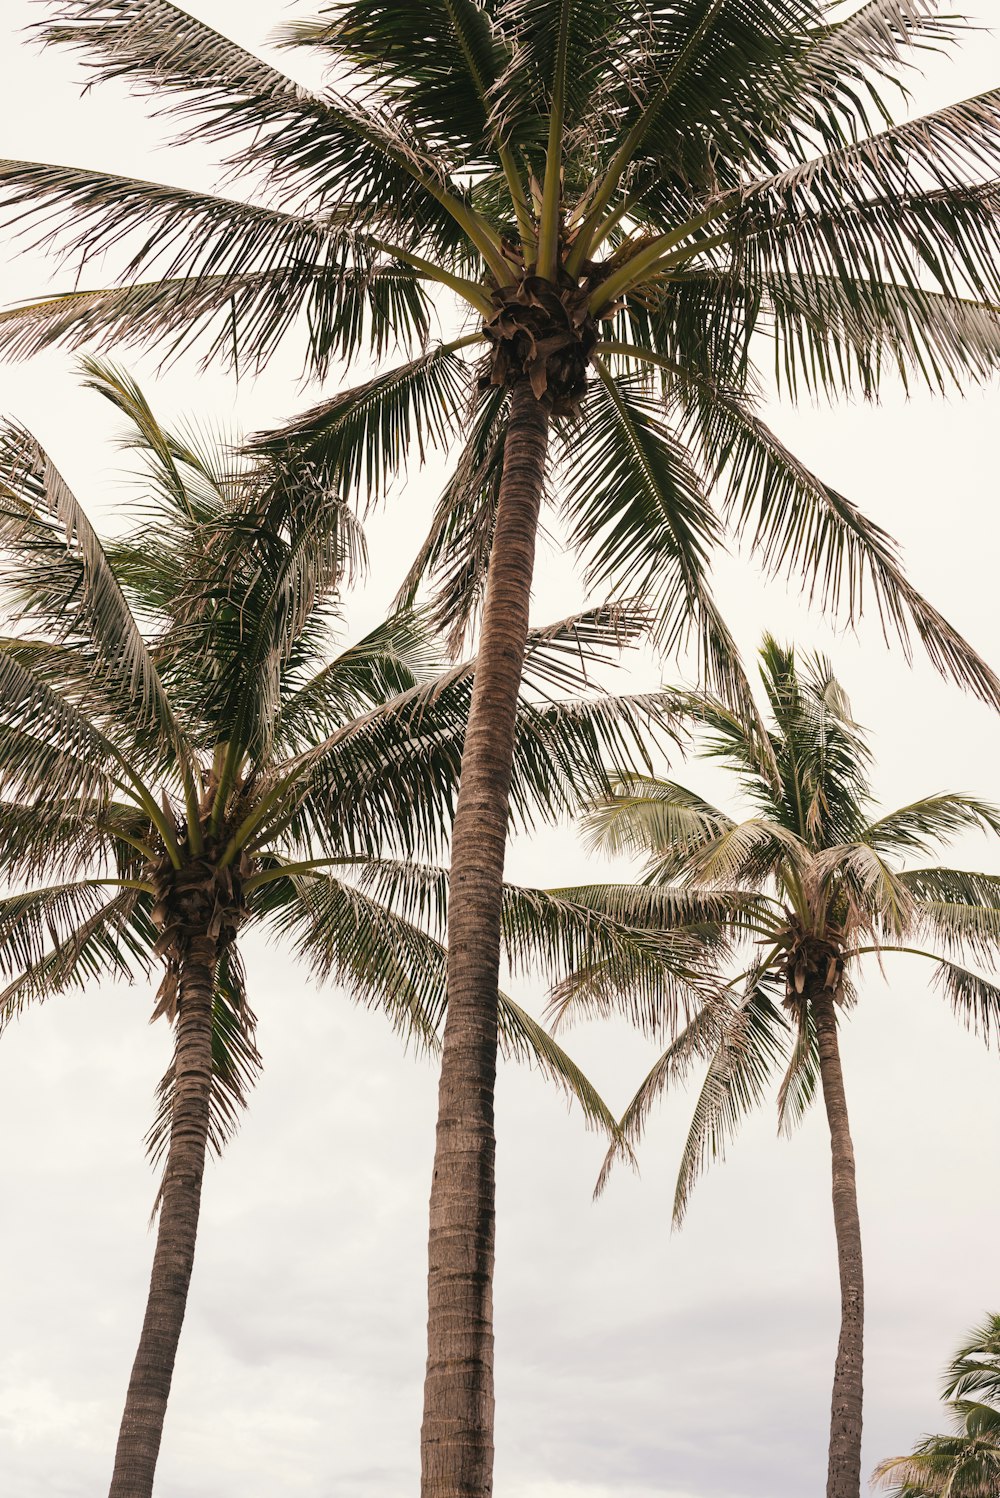 coconut trees photograph